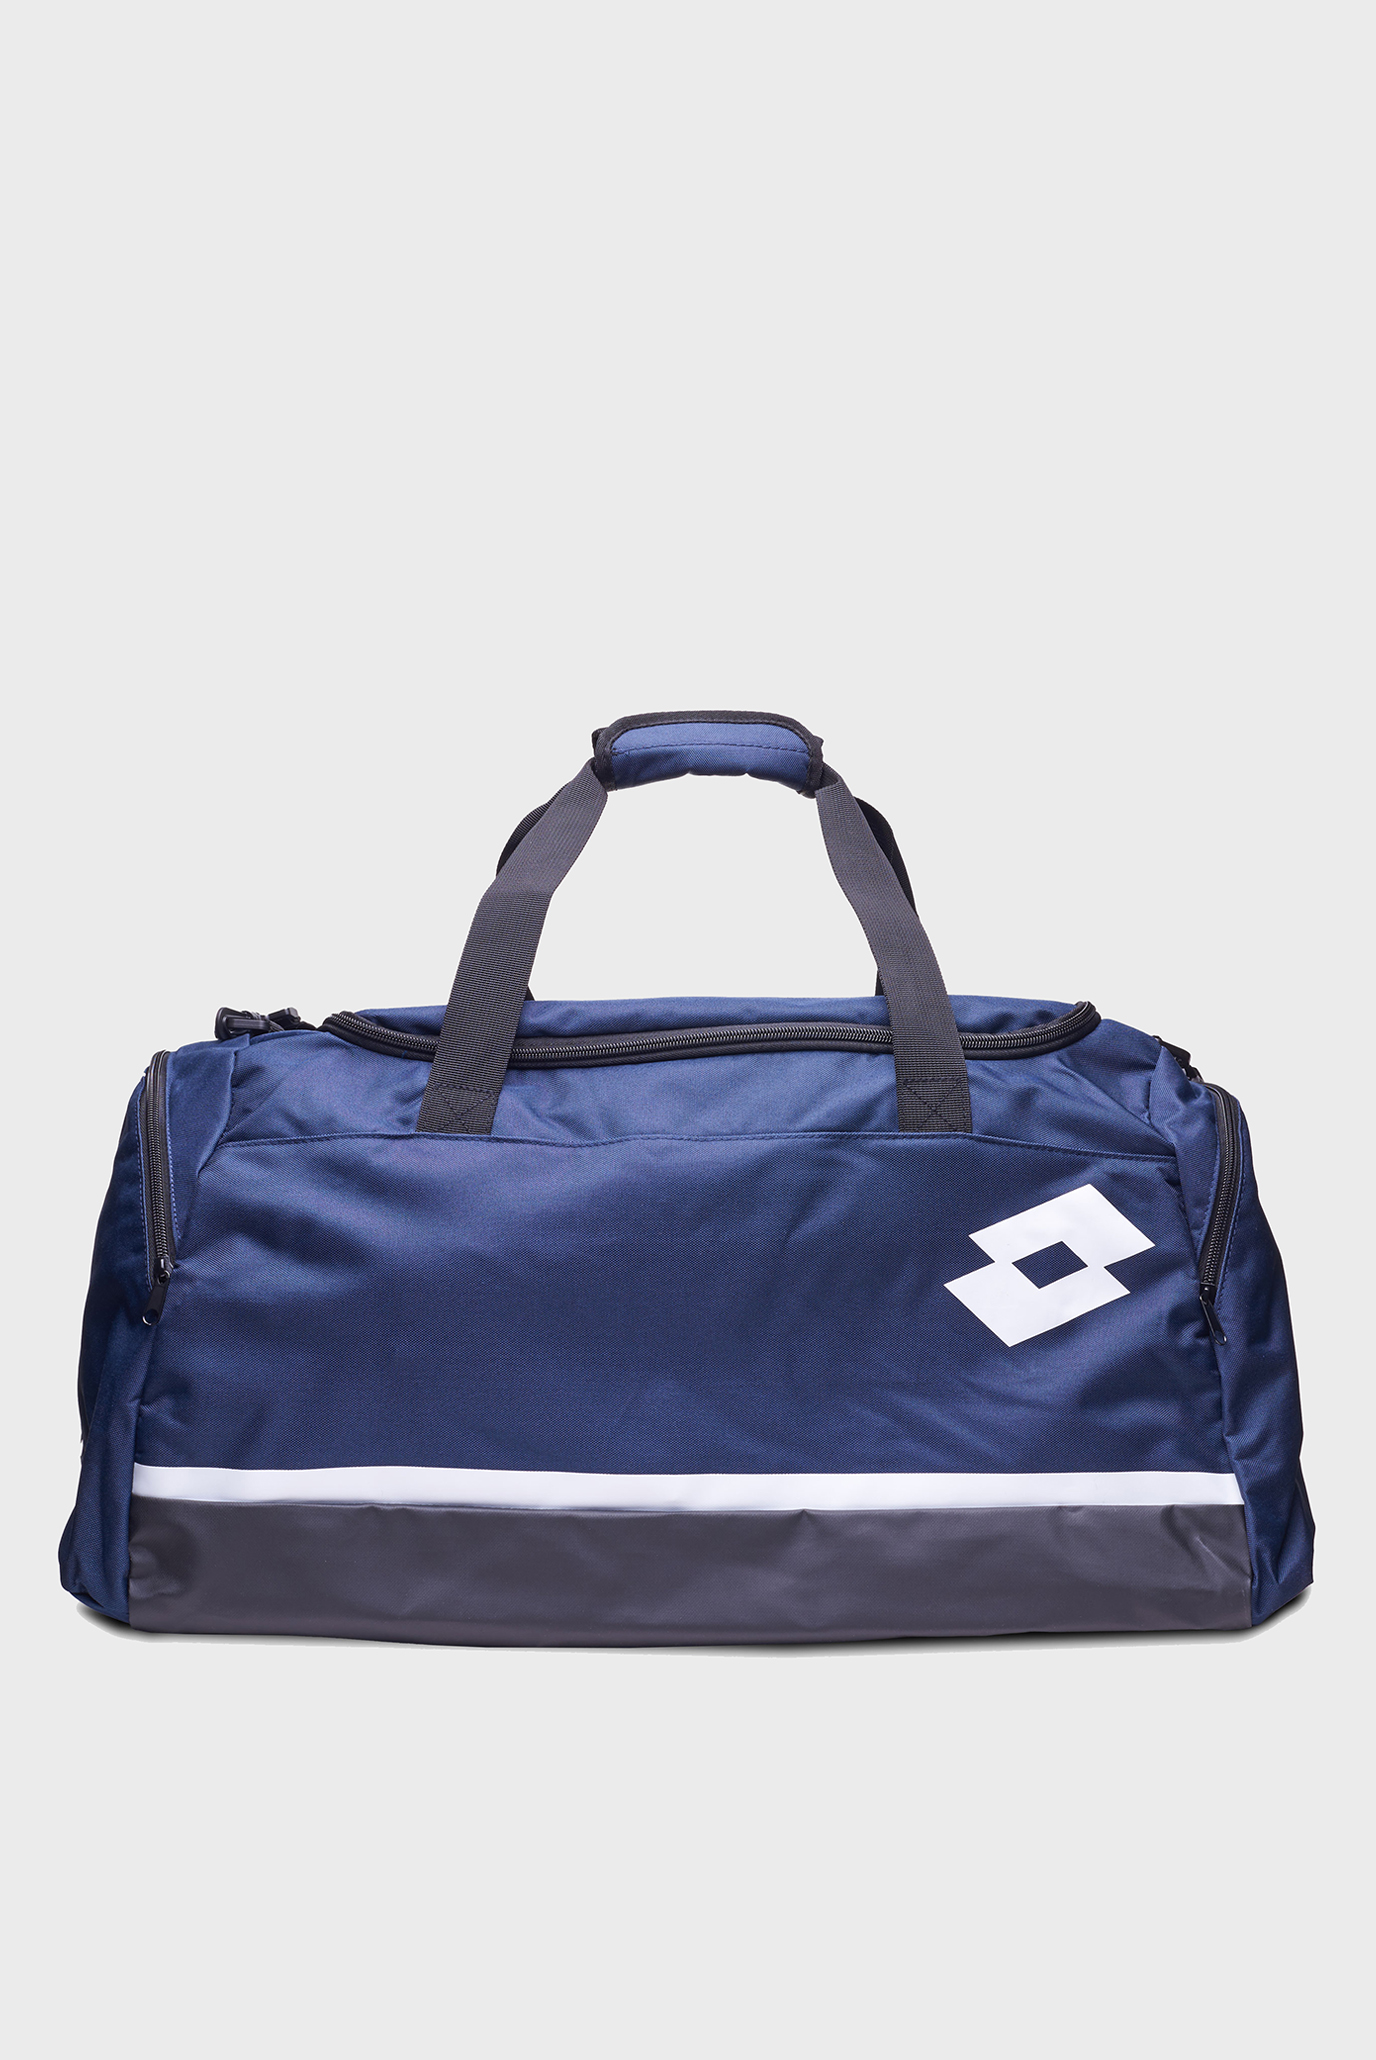 Мужская синяя спортивная сумка ELITE SPORT BAG L 1